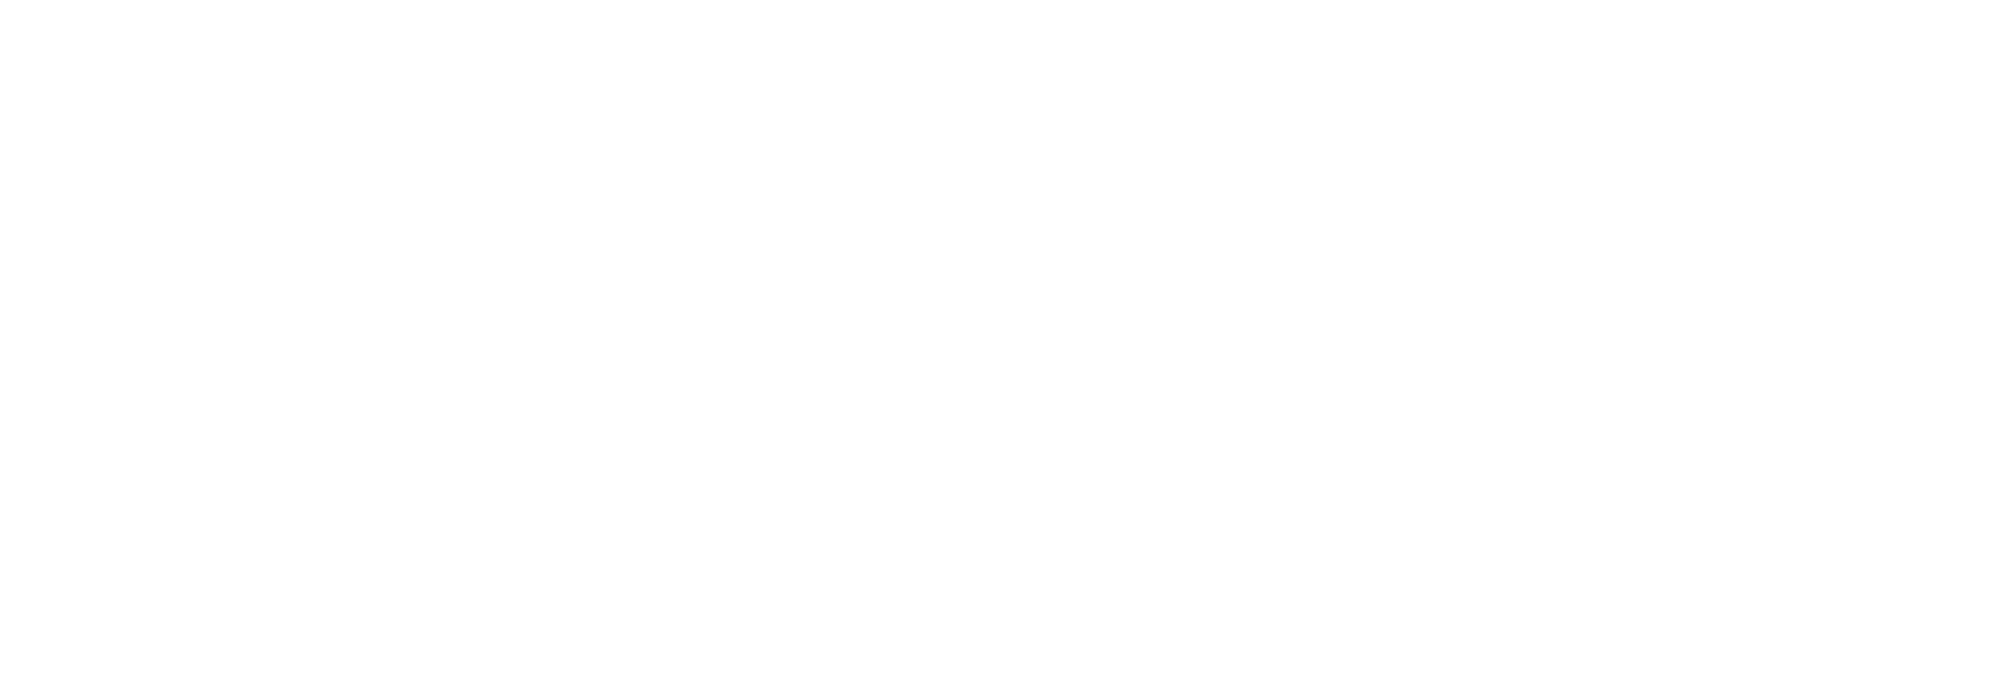 bic-1-logo-black-and-white2